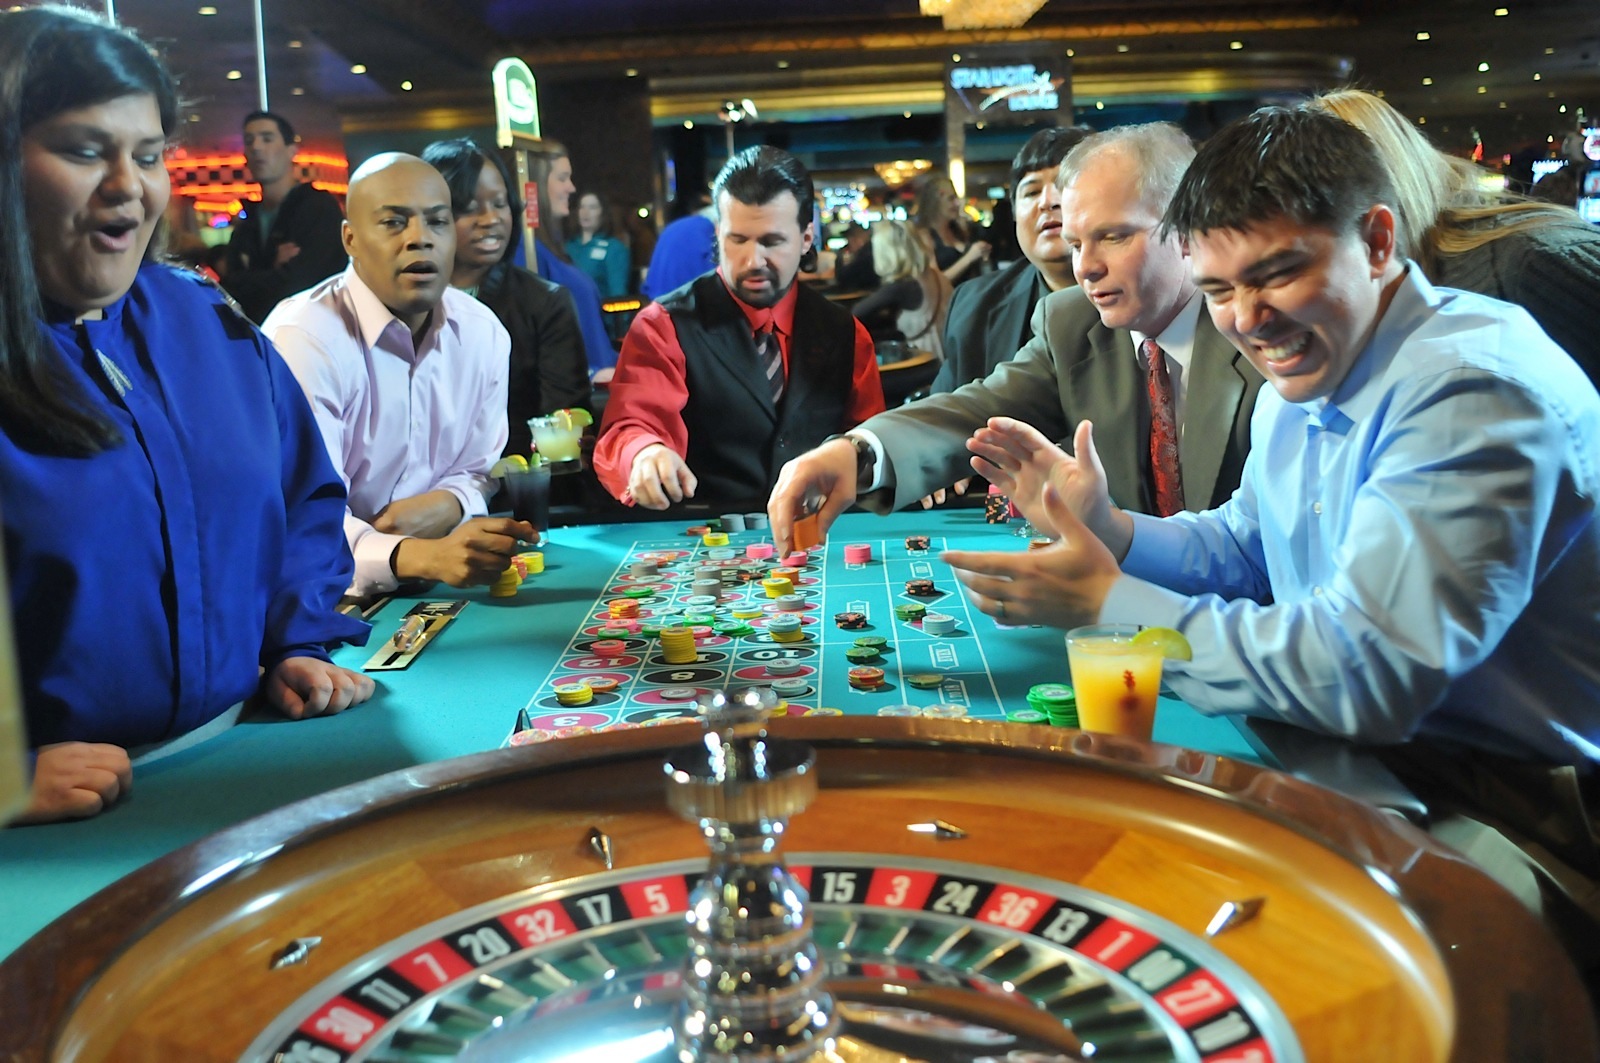 Roulette at Gambling Resorts